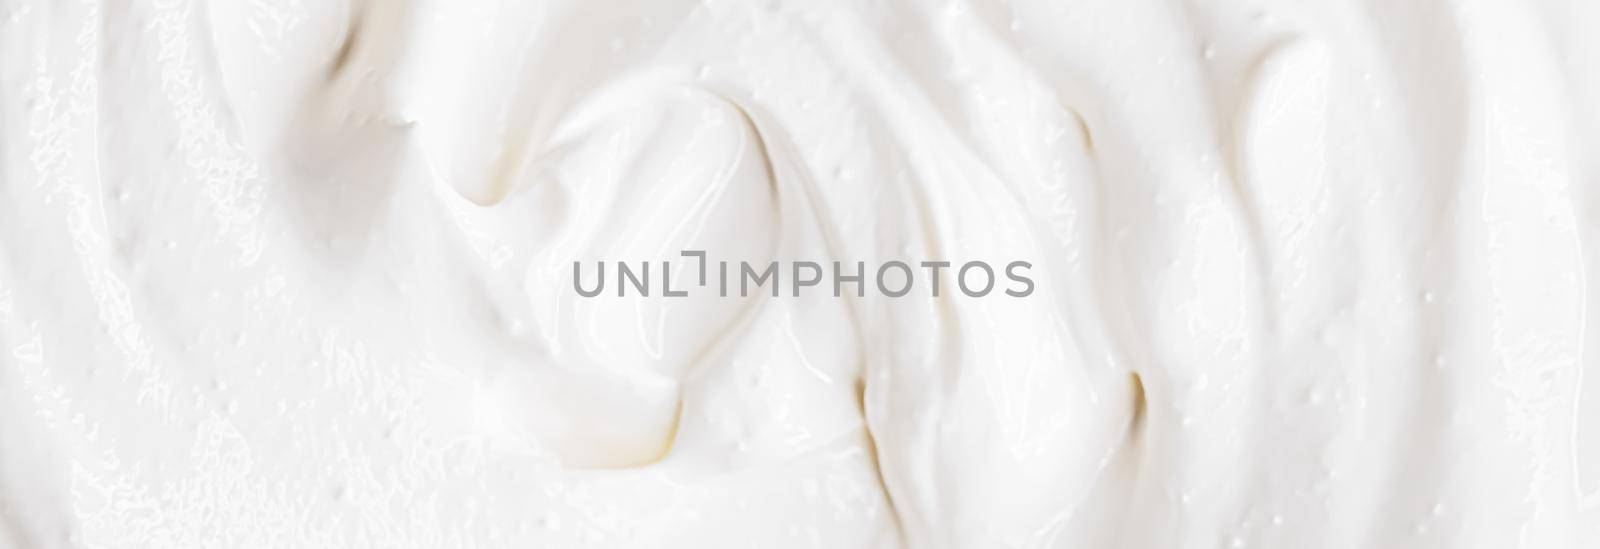 Homemade organic whipped cream, product texture closeup